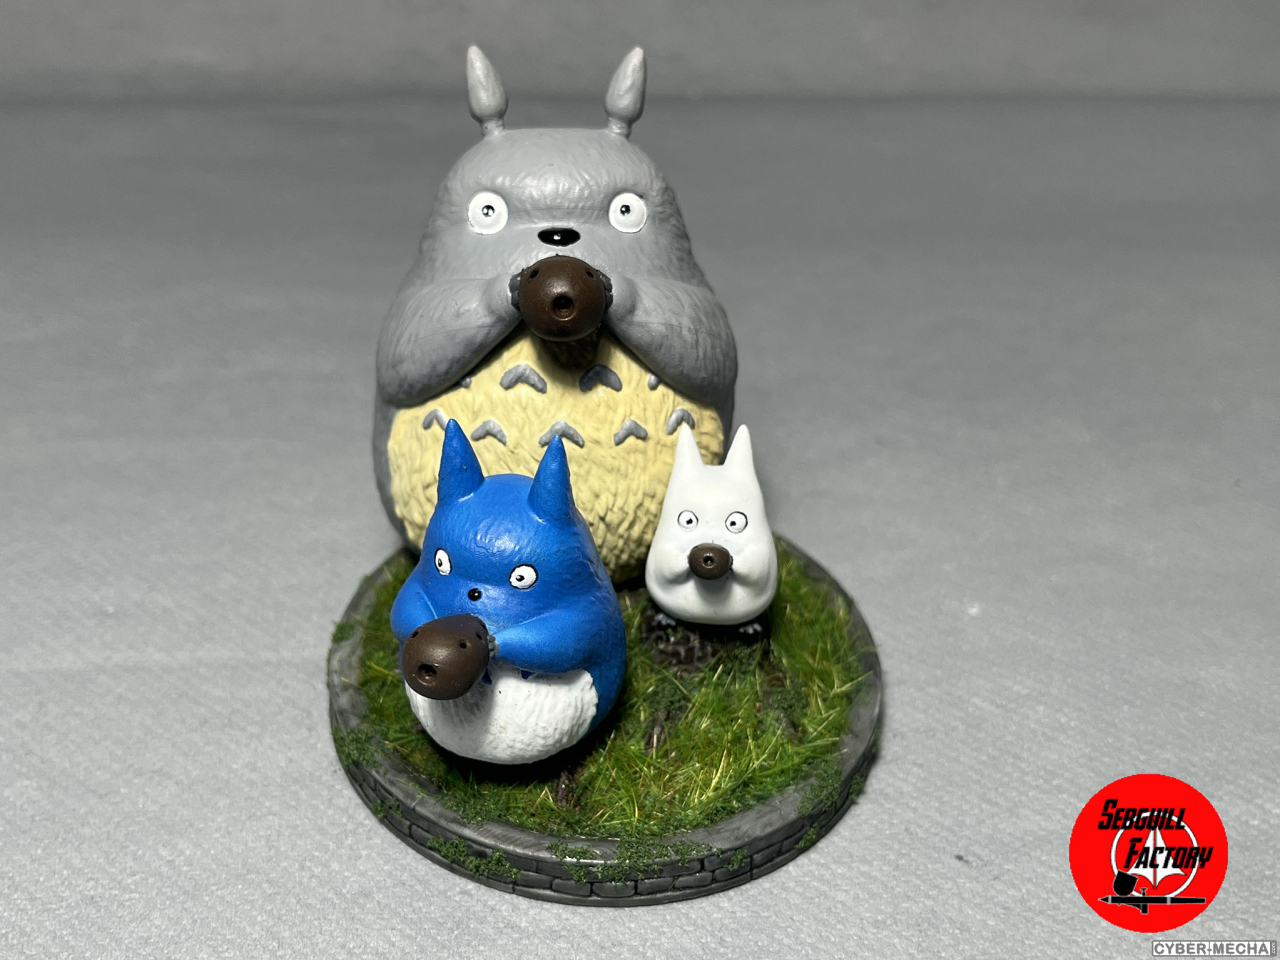 Print 3D : Totoro 1701076743